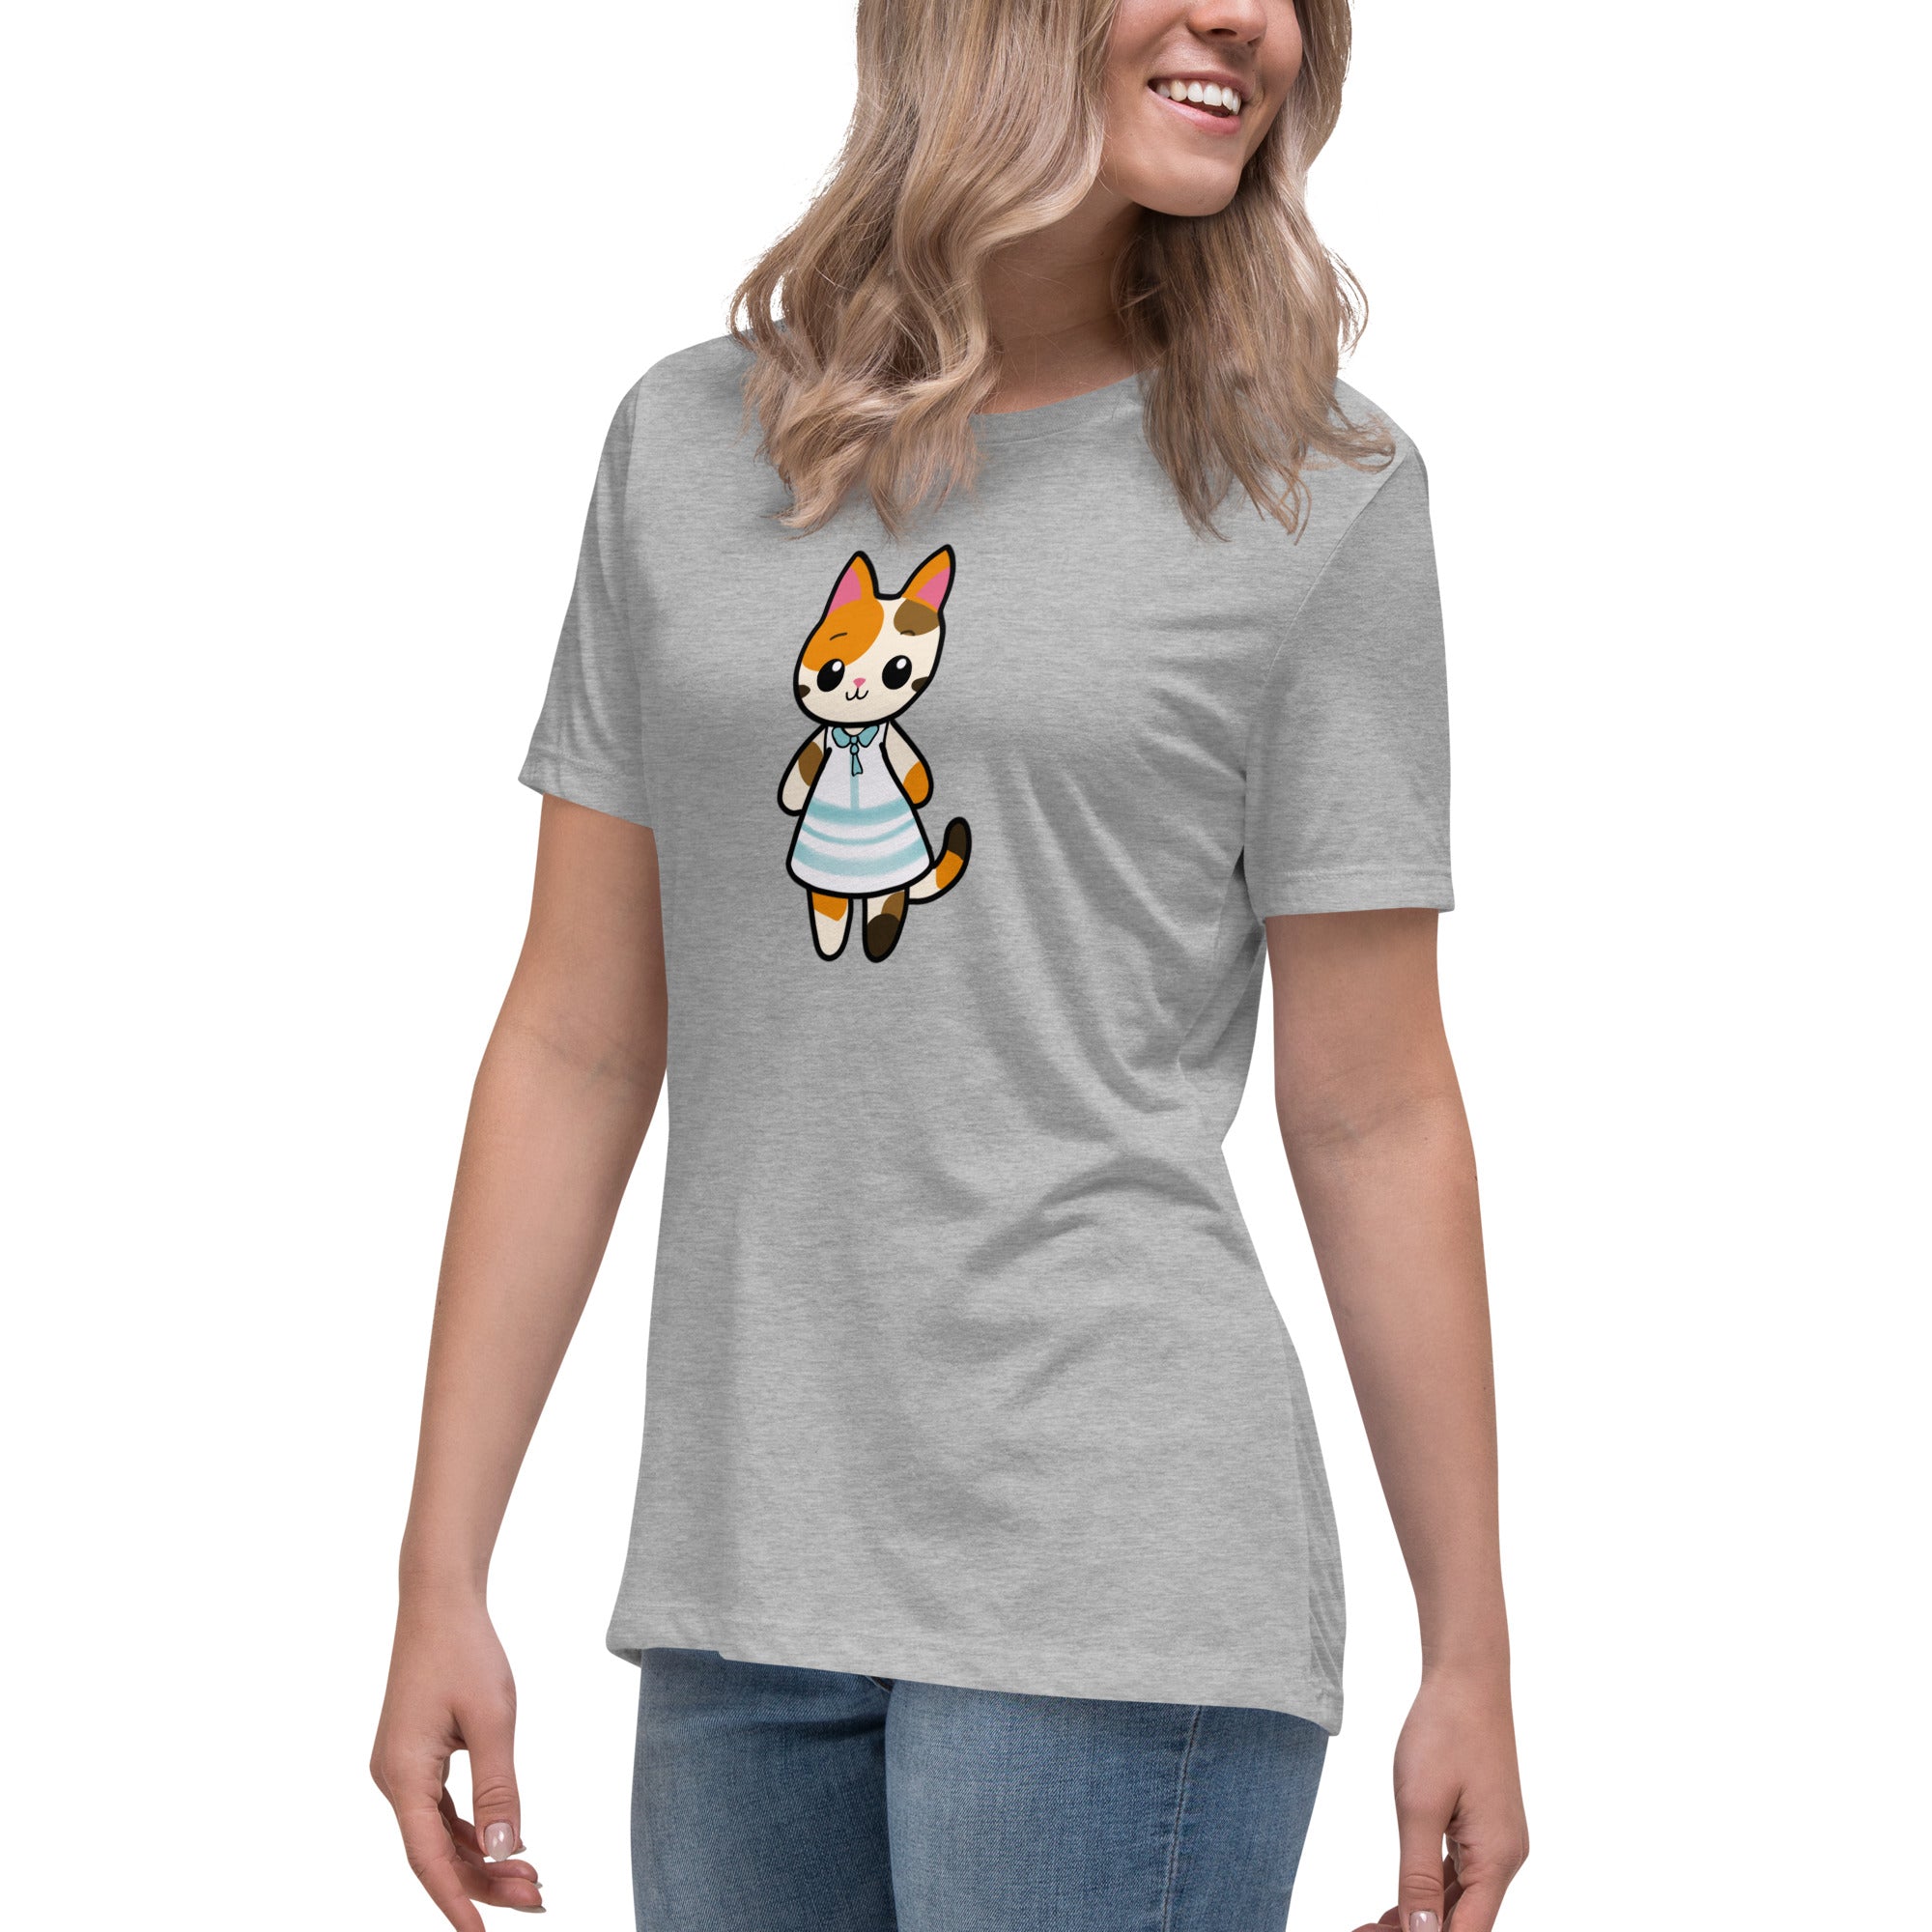 Calico Cat in a Sun Dress Women's Relaxed T-Shirt